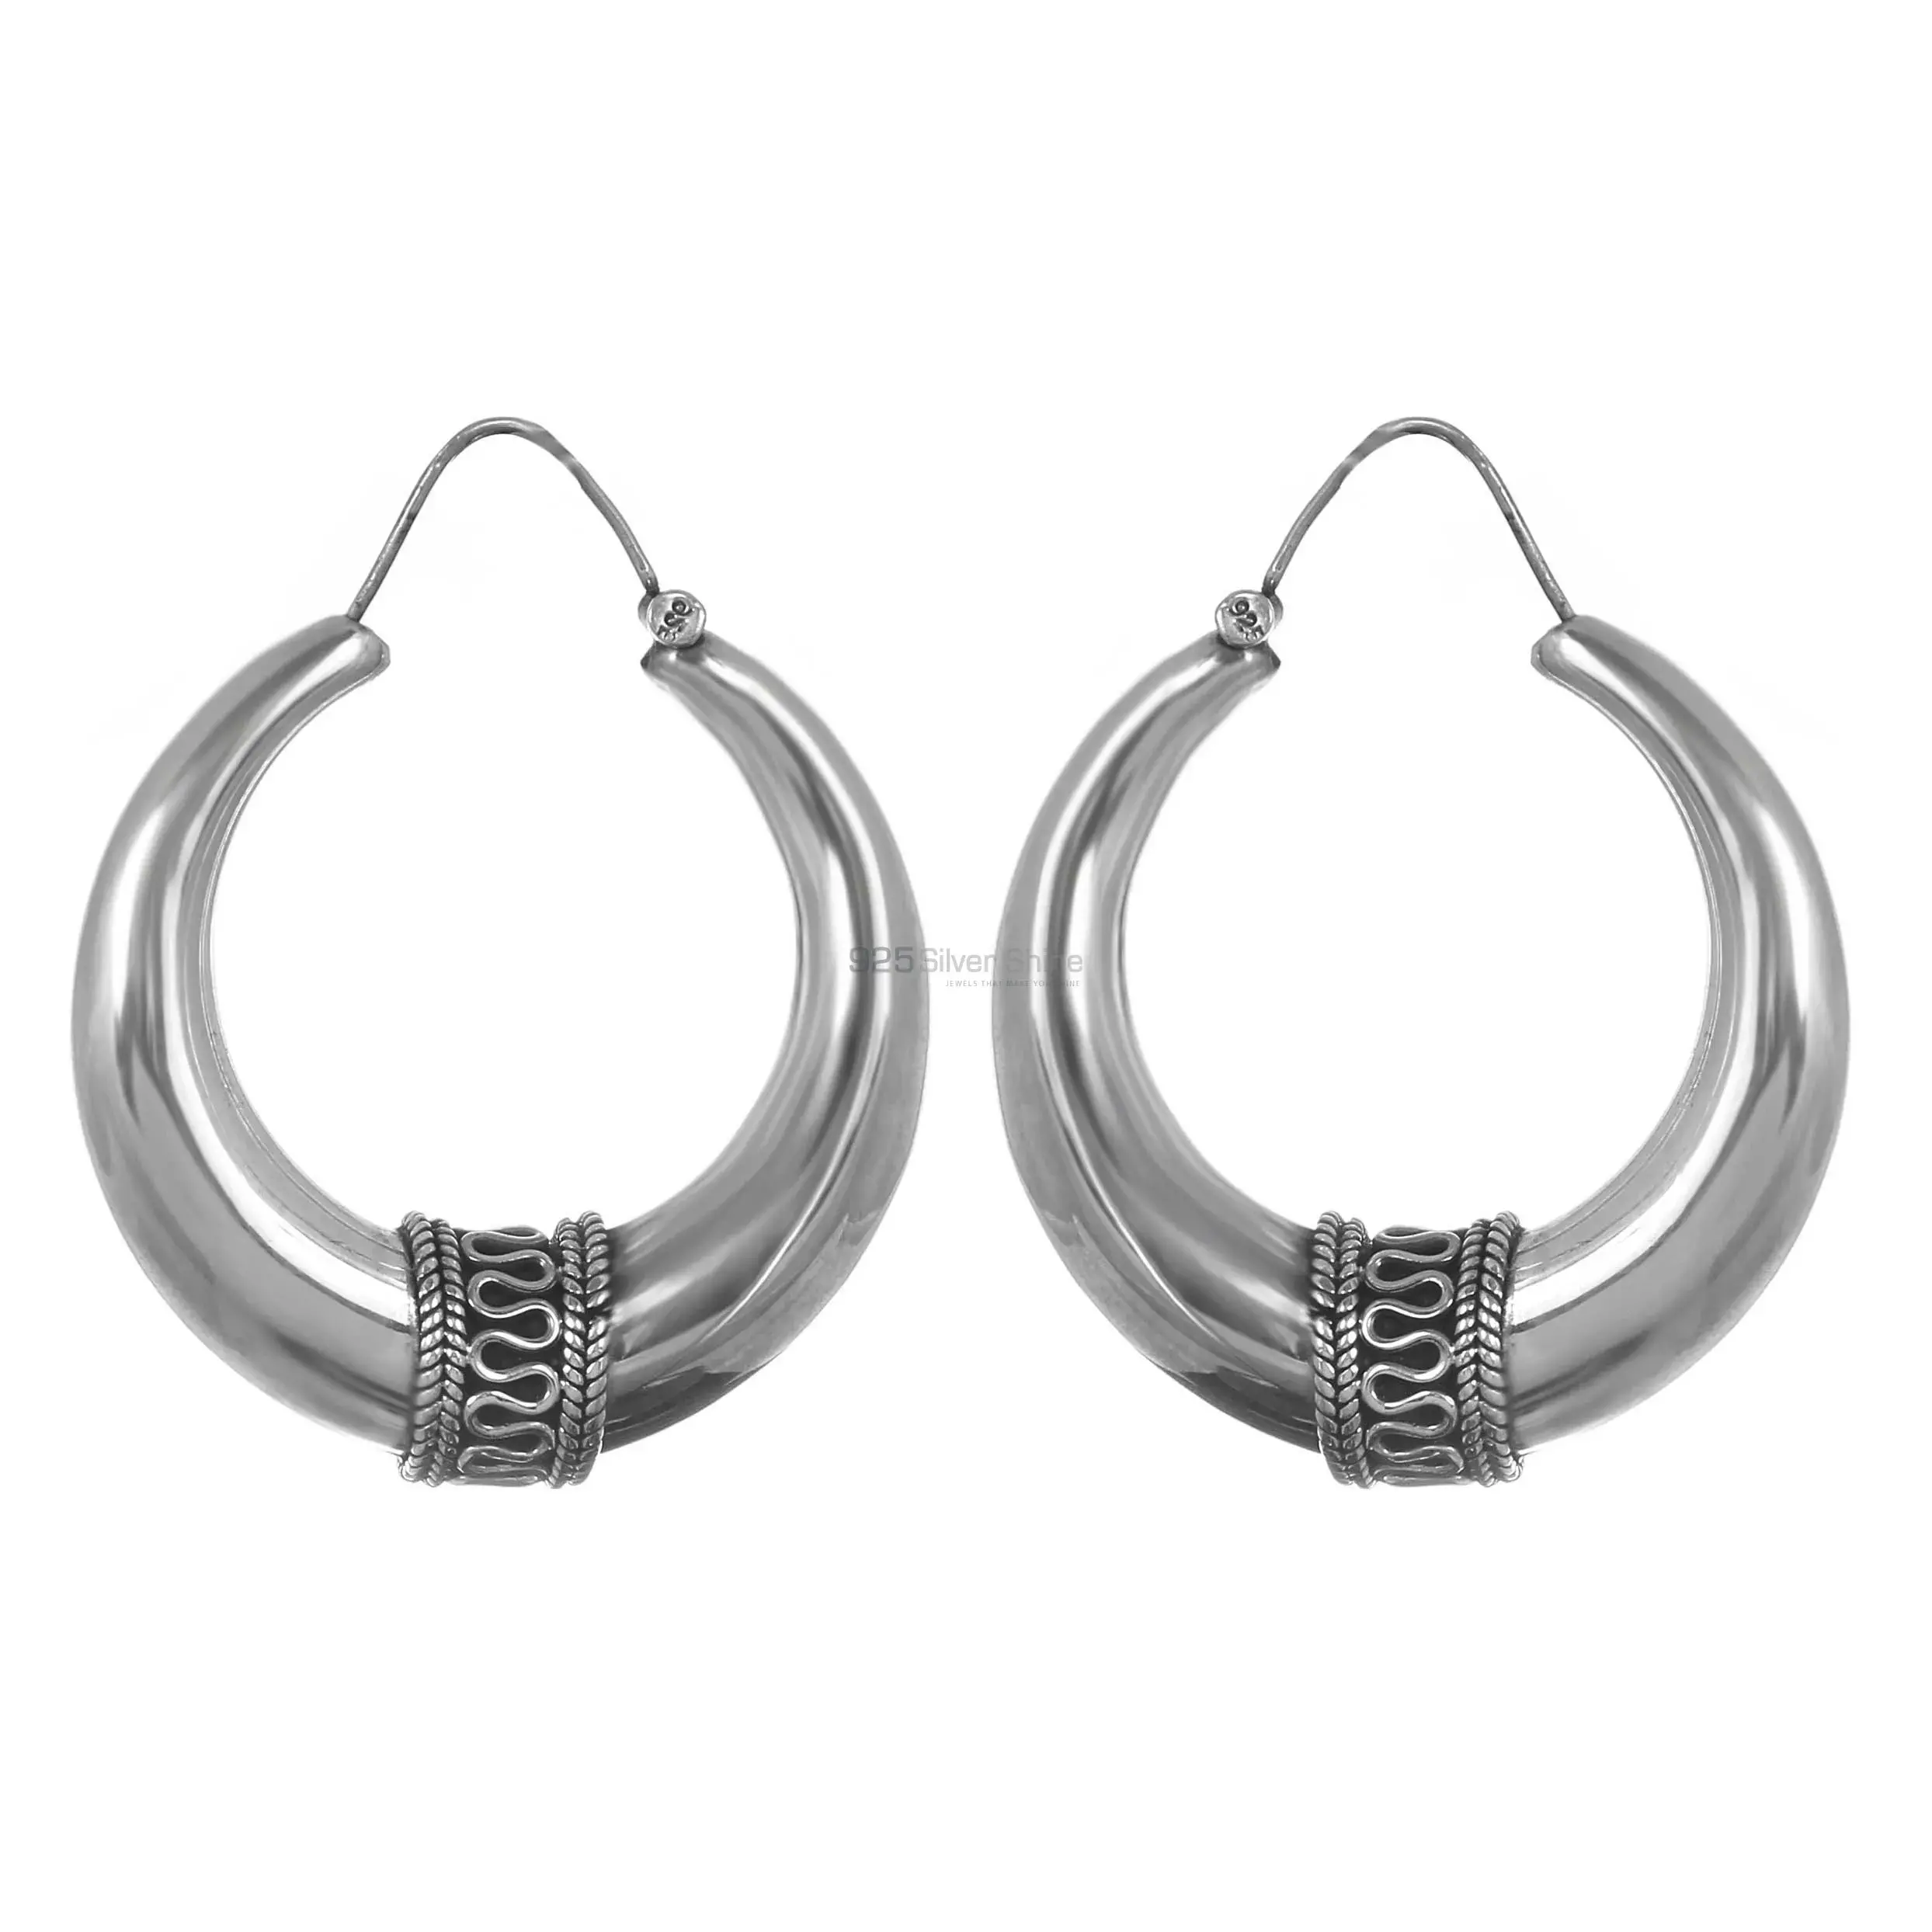 Sterling Silver Hoop Earrings: Elevating Style with Originality